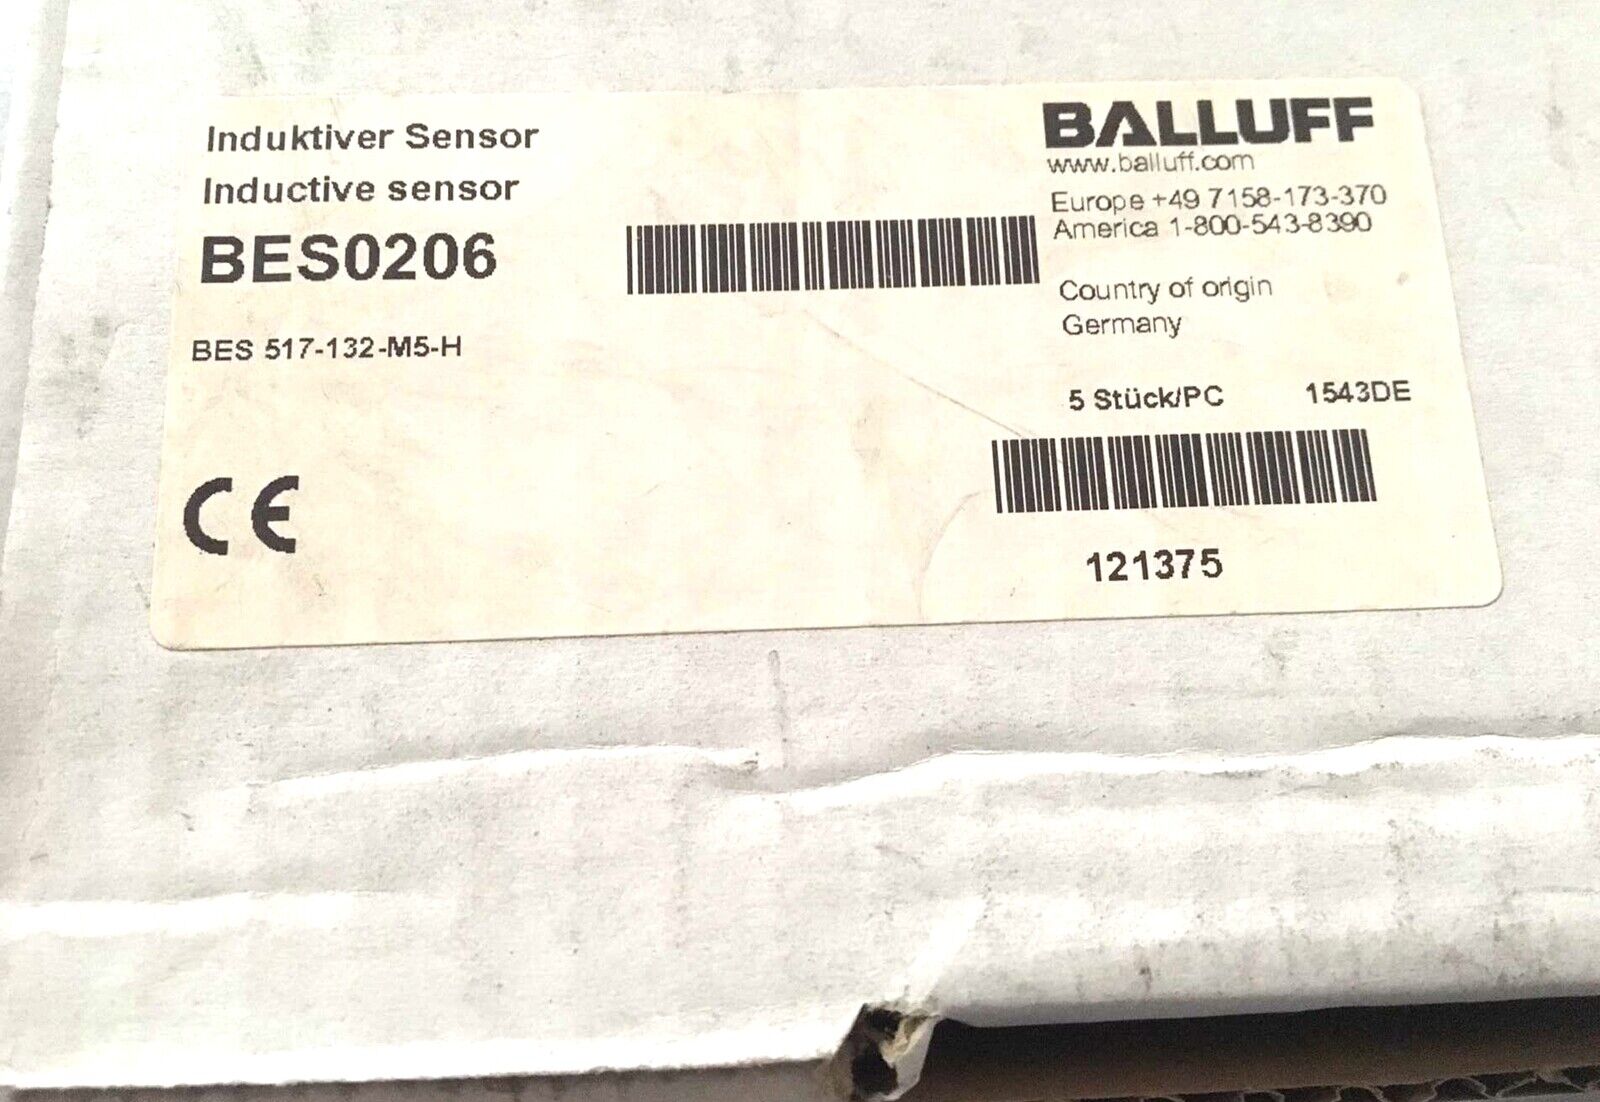 BALLUFF BES 517-132-M5-H Inductive Sensors